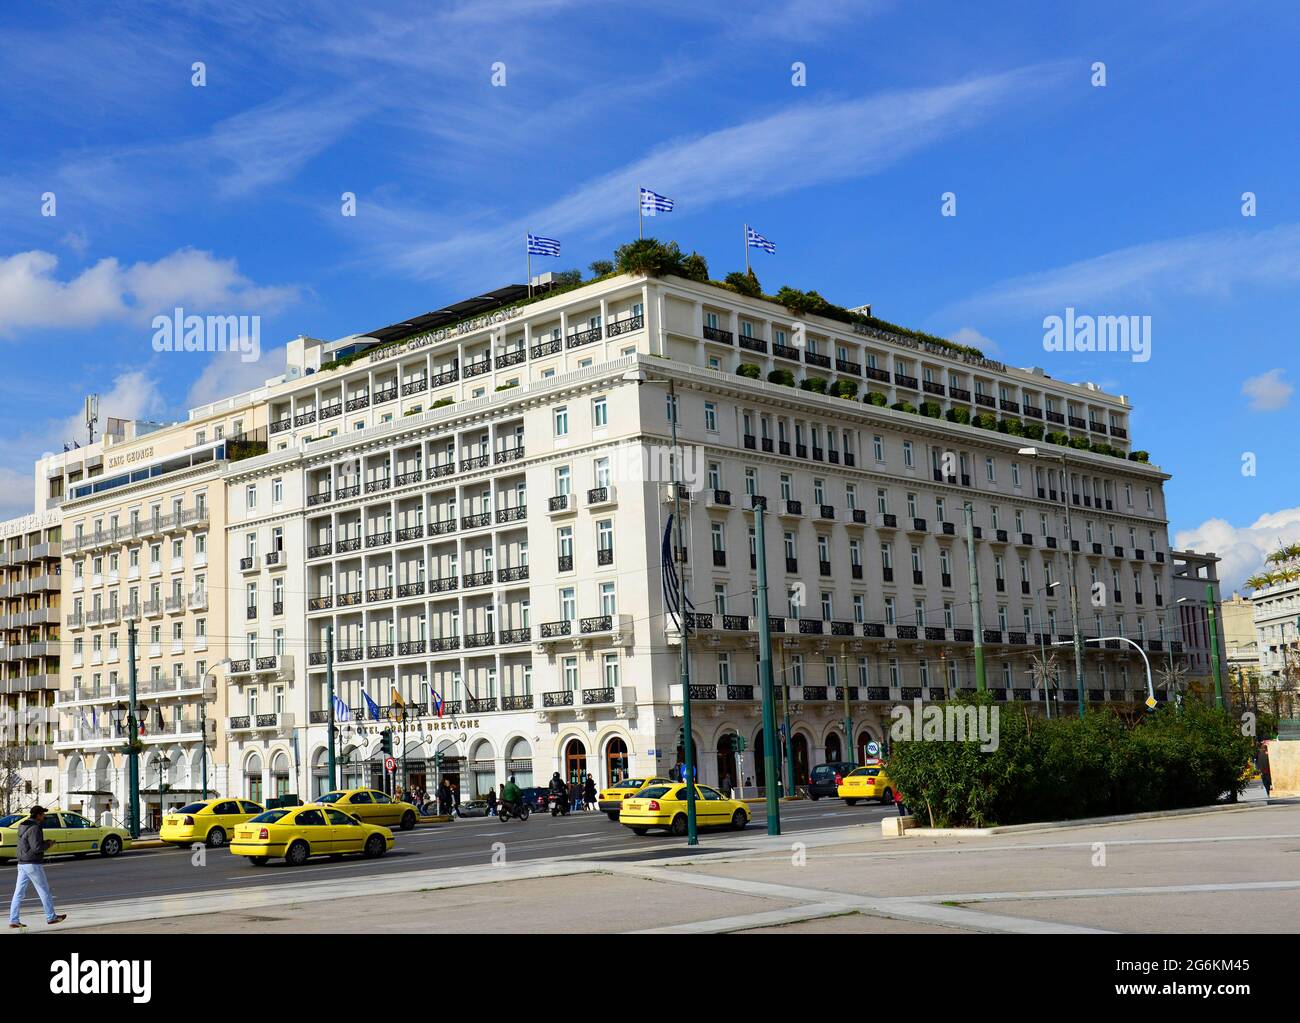 Hotel Grande Bretagne by the Syntagma Square in Athens, Greece. Stock Photo